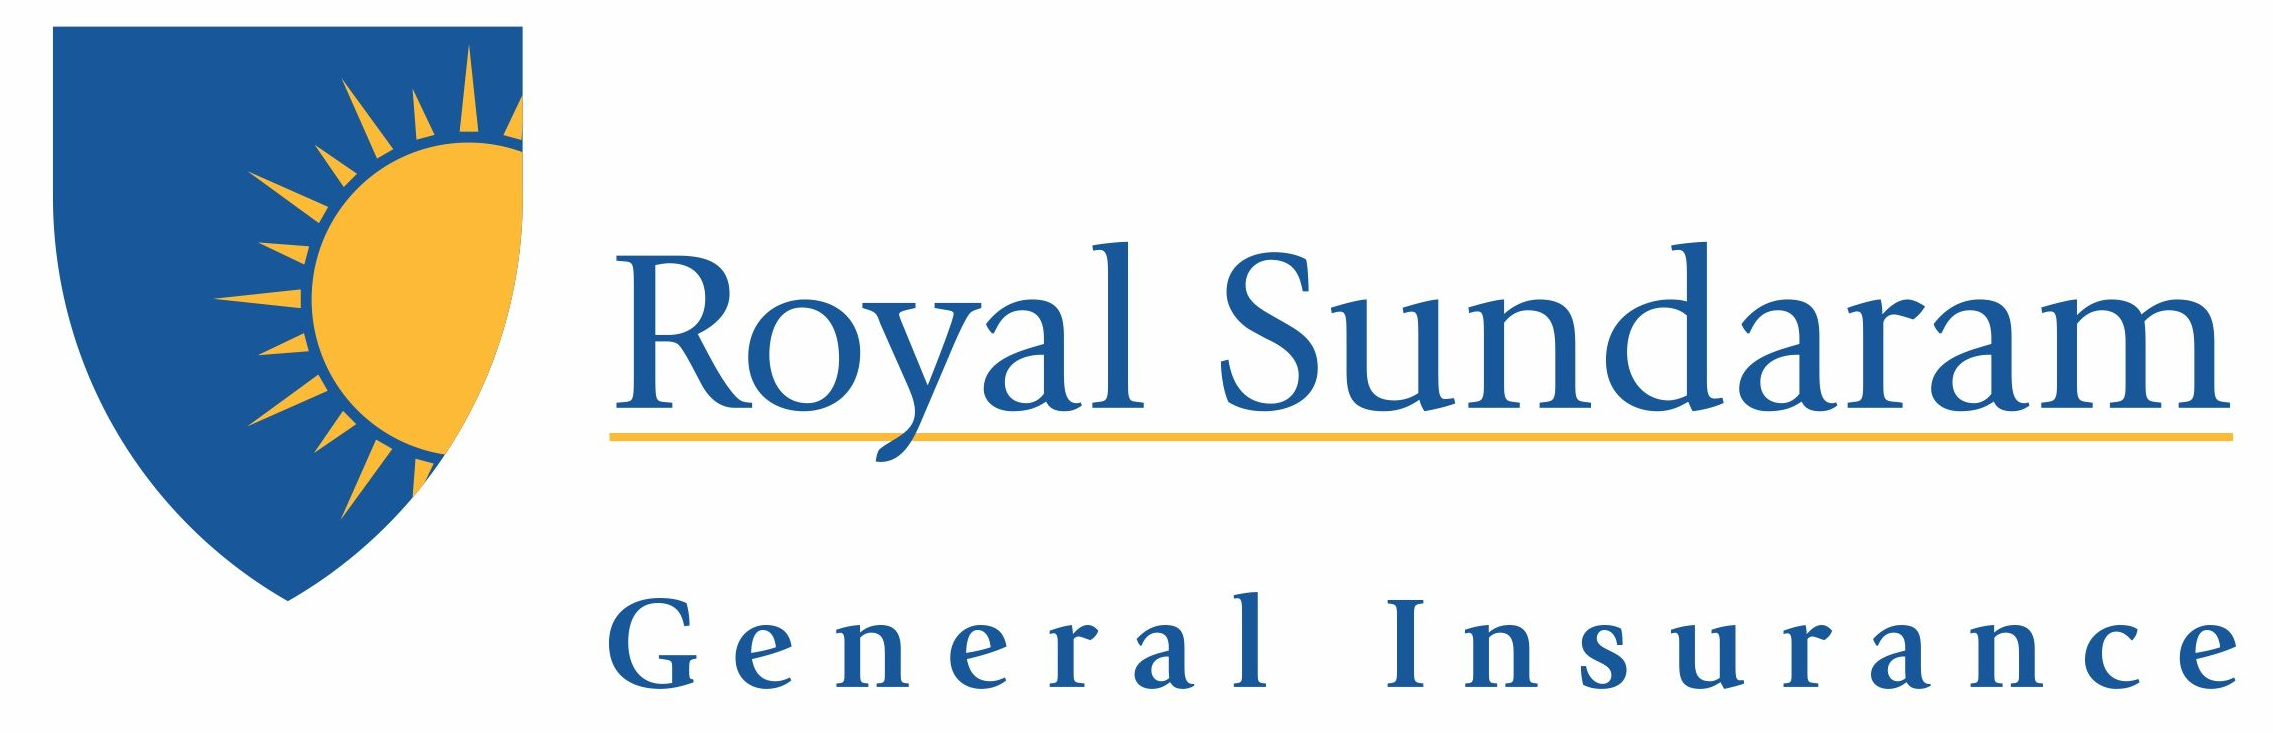 Royal Sundaram General Insurance Co Limited at Rs 6200/year in Gurugram |  ID: 2853216804030